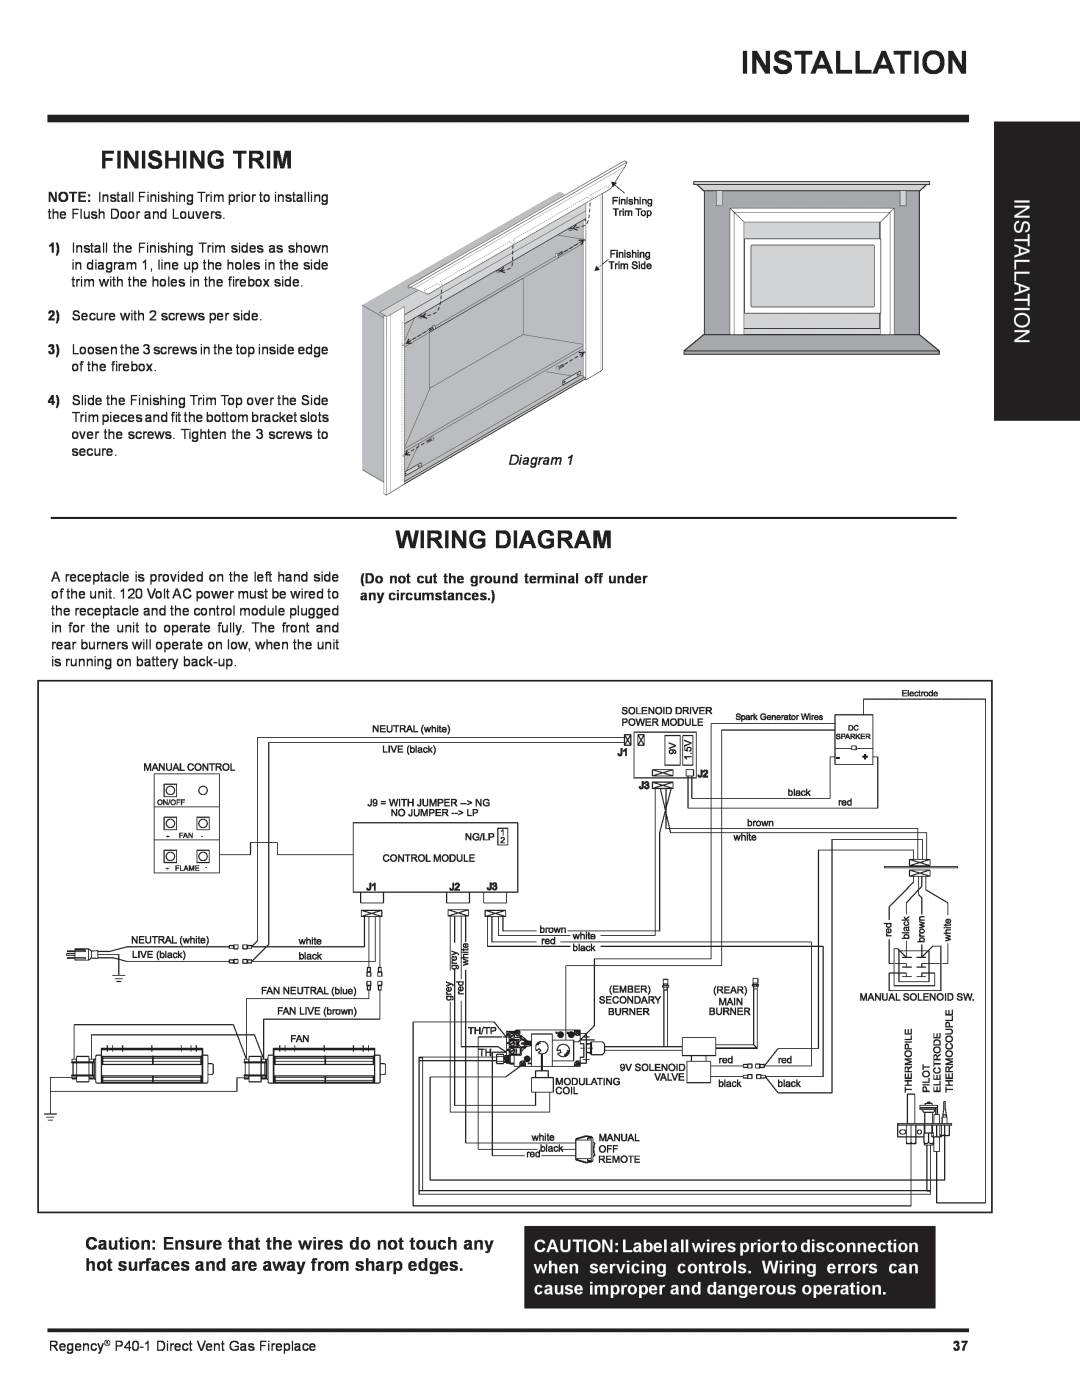 Regency P40-LP1, P40-NG1 installation manual Finishing Trim, Wiring Diagram, Installation 